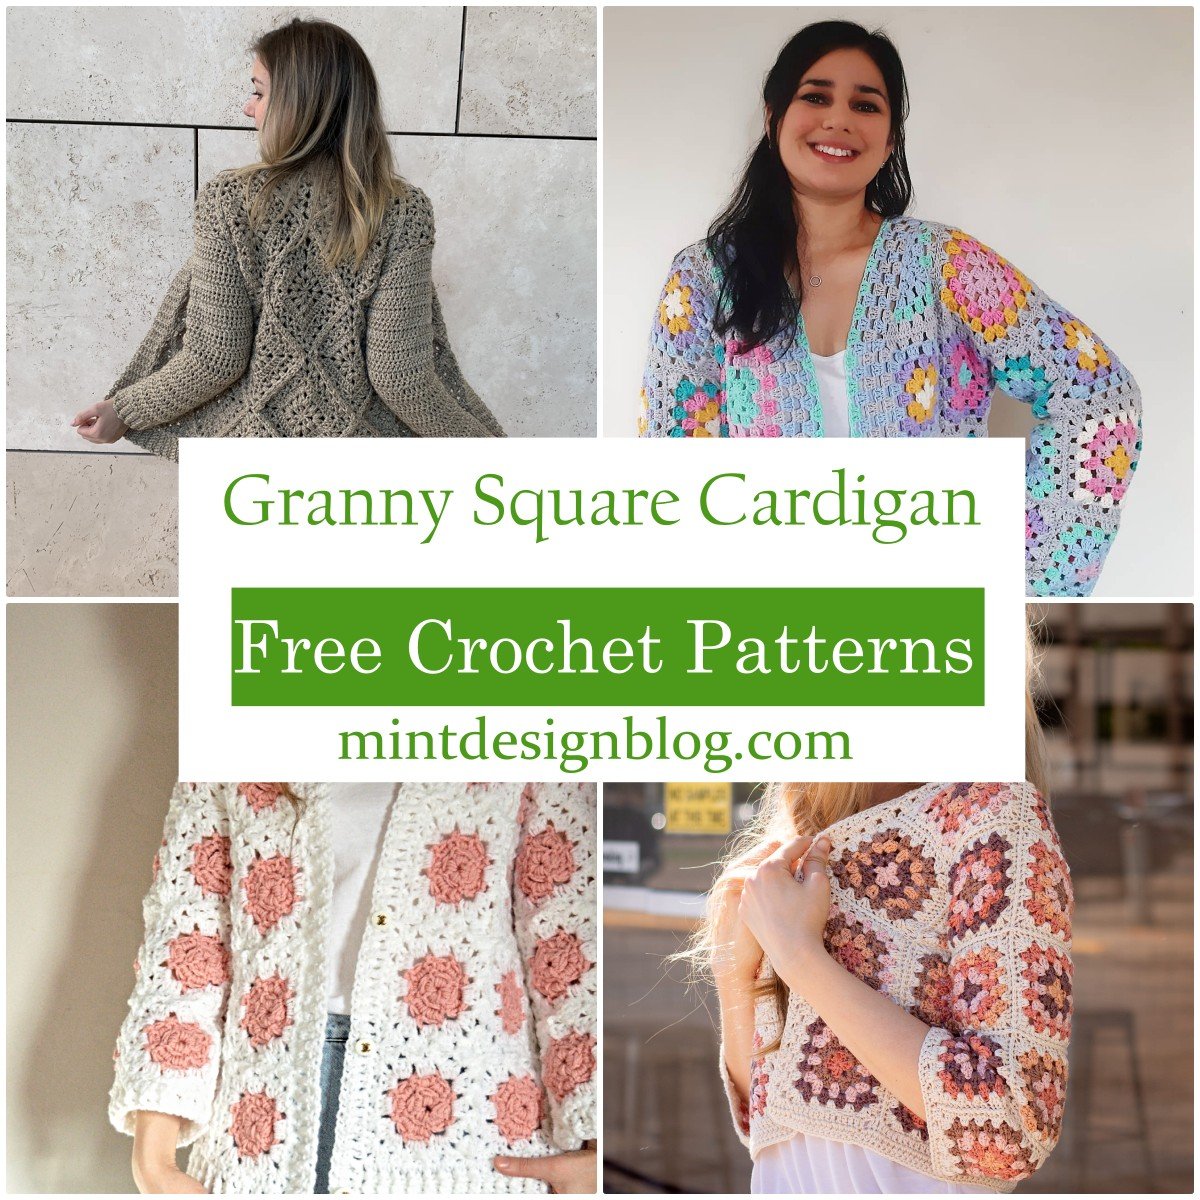 20 Free Crochet Granny Square Cardigan Patterns - Mint Design Blog